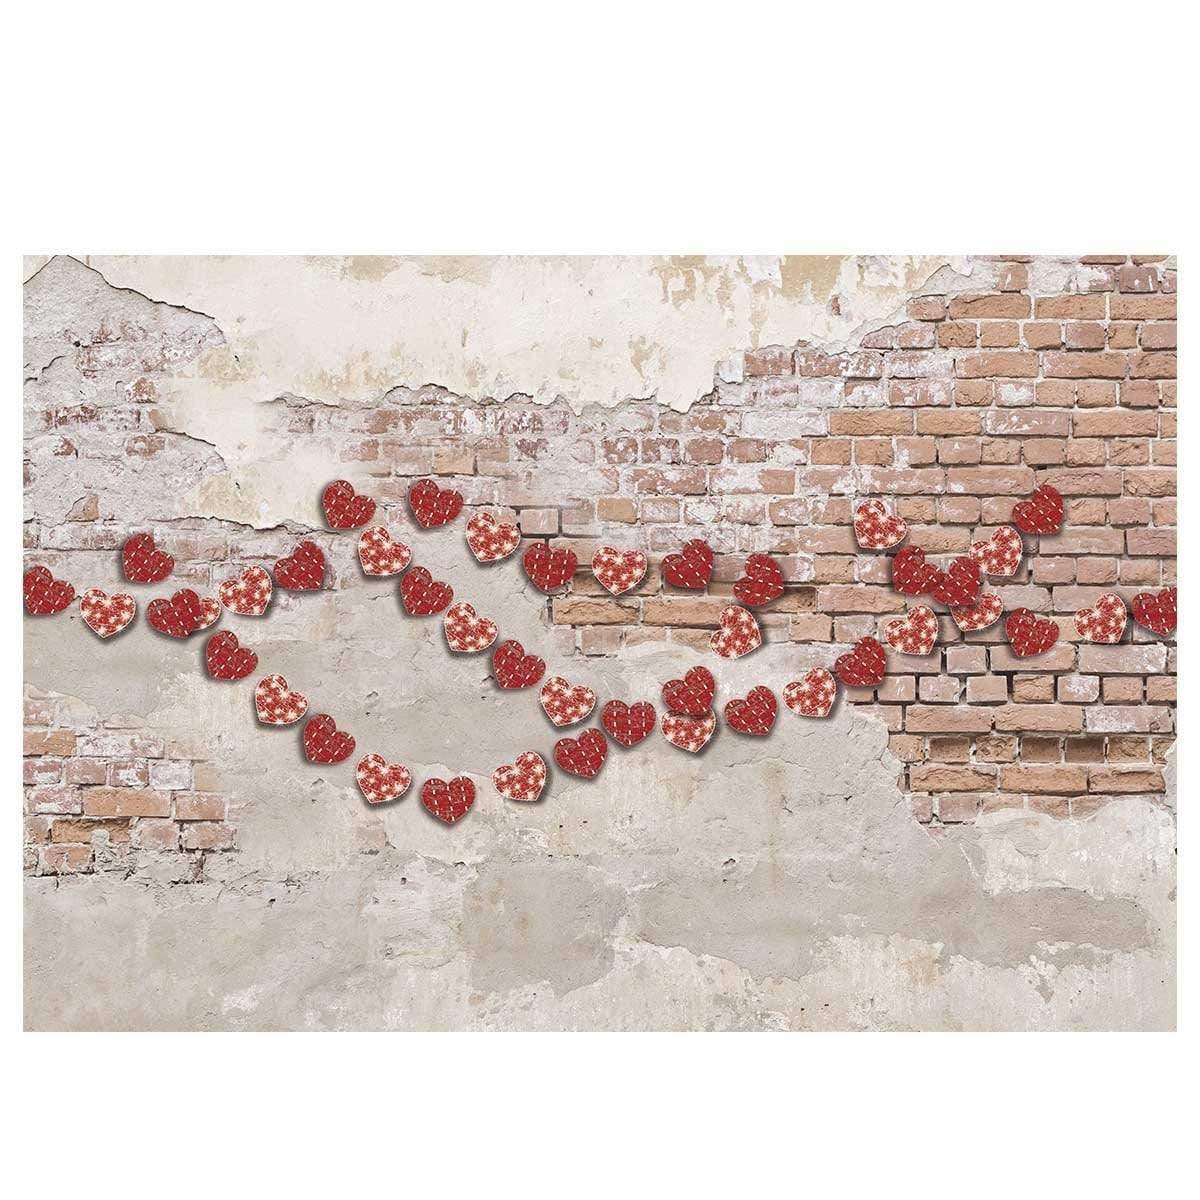 Allenjoy Retro Red Heart Cracked Brick Wall Backdrop - Allenjoystudio